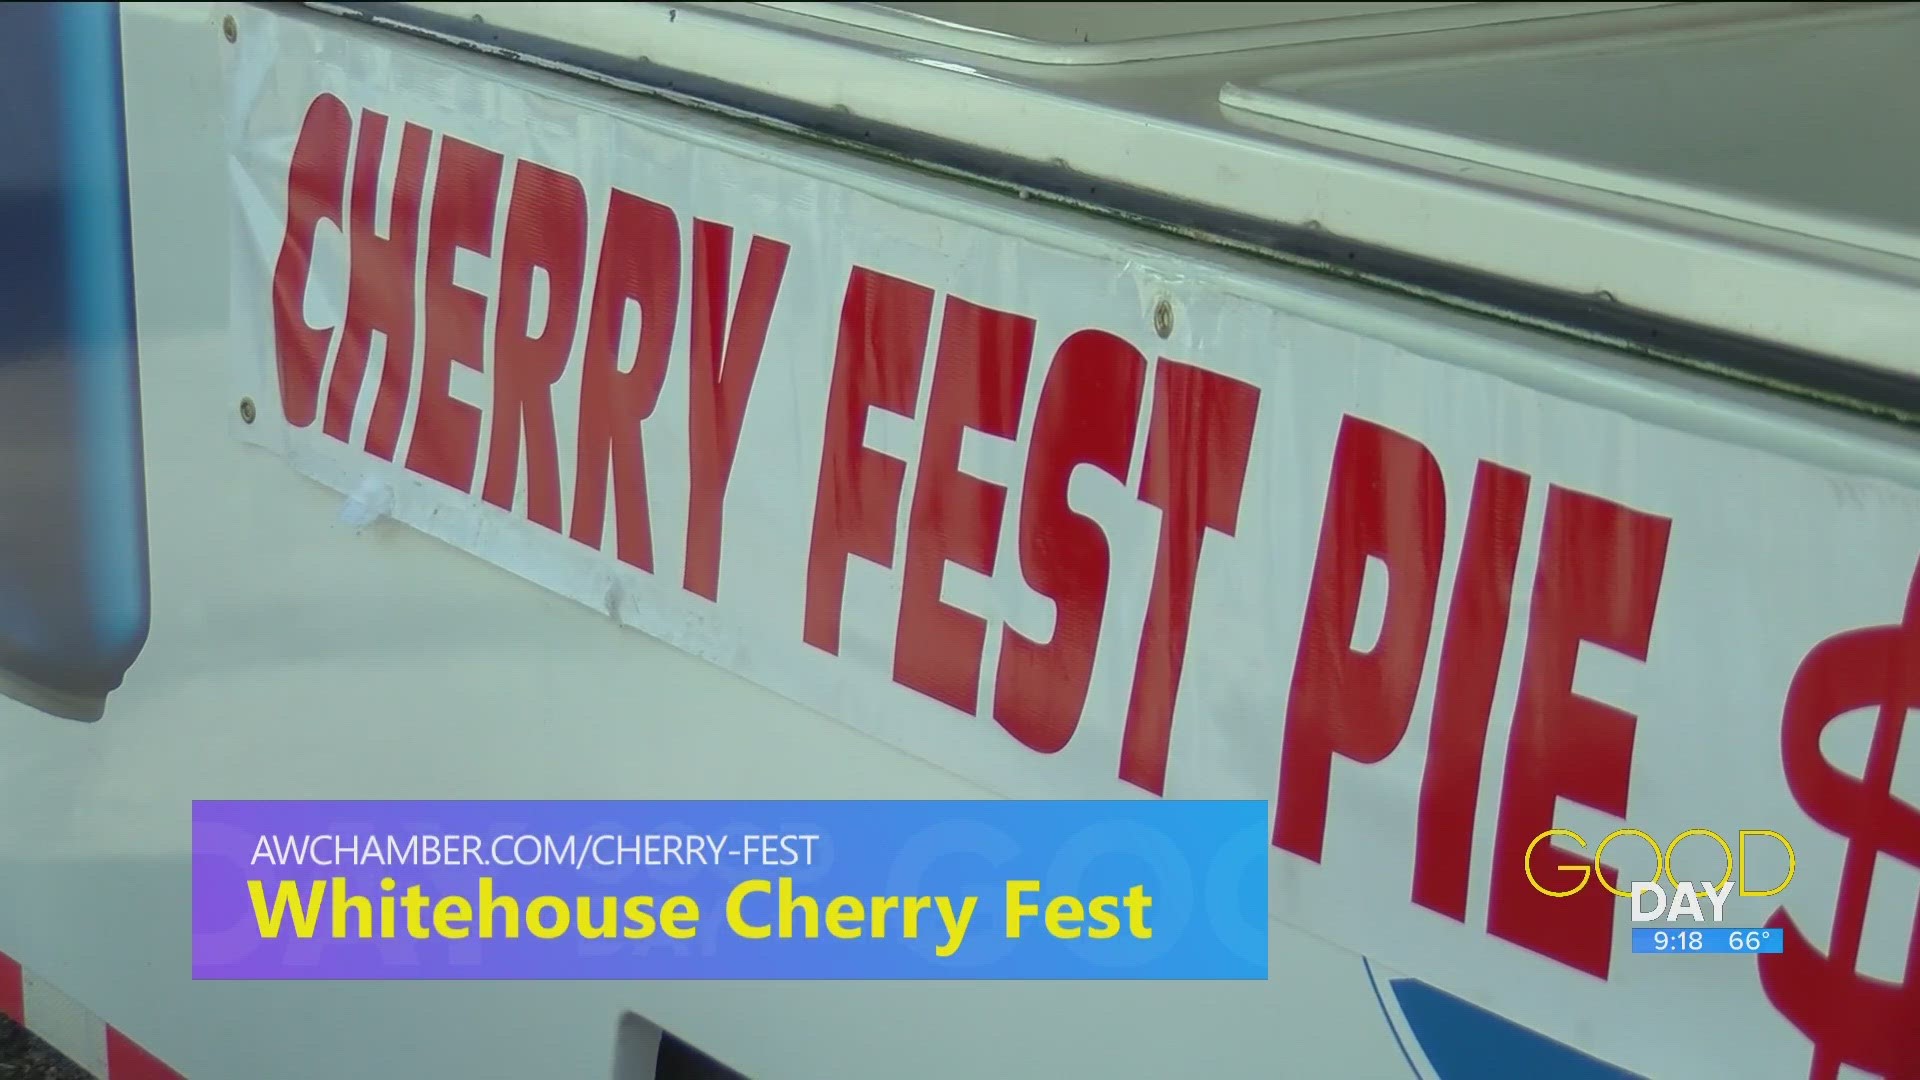 'Gathering of community' Whitehouse Cherry Fest to celebrate 40 years